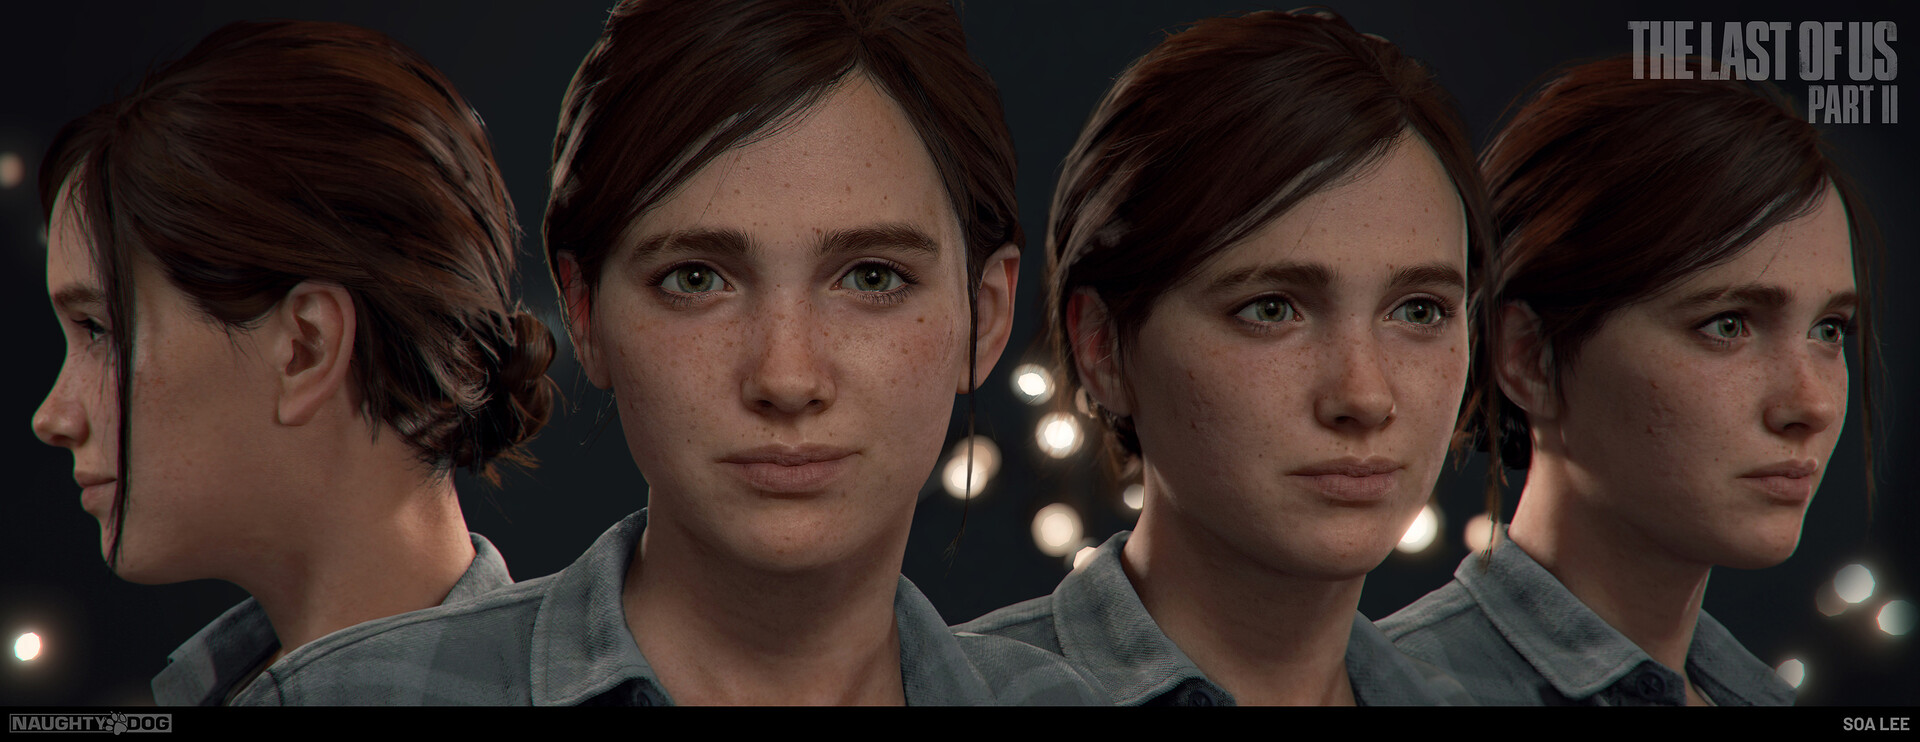 Ellie age comparison 14 > 16 > 19 (© Soa Lee / Naughty Dog) : r/thelastofus